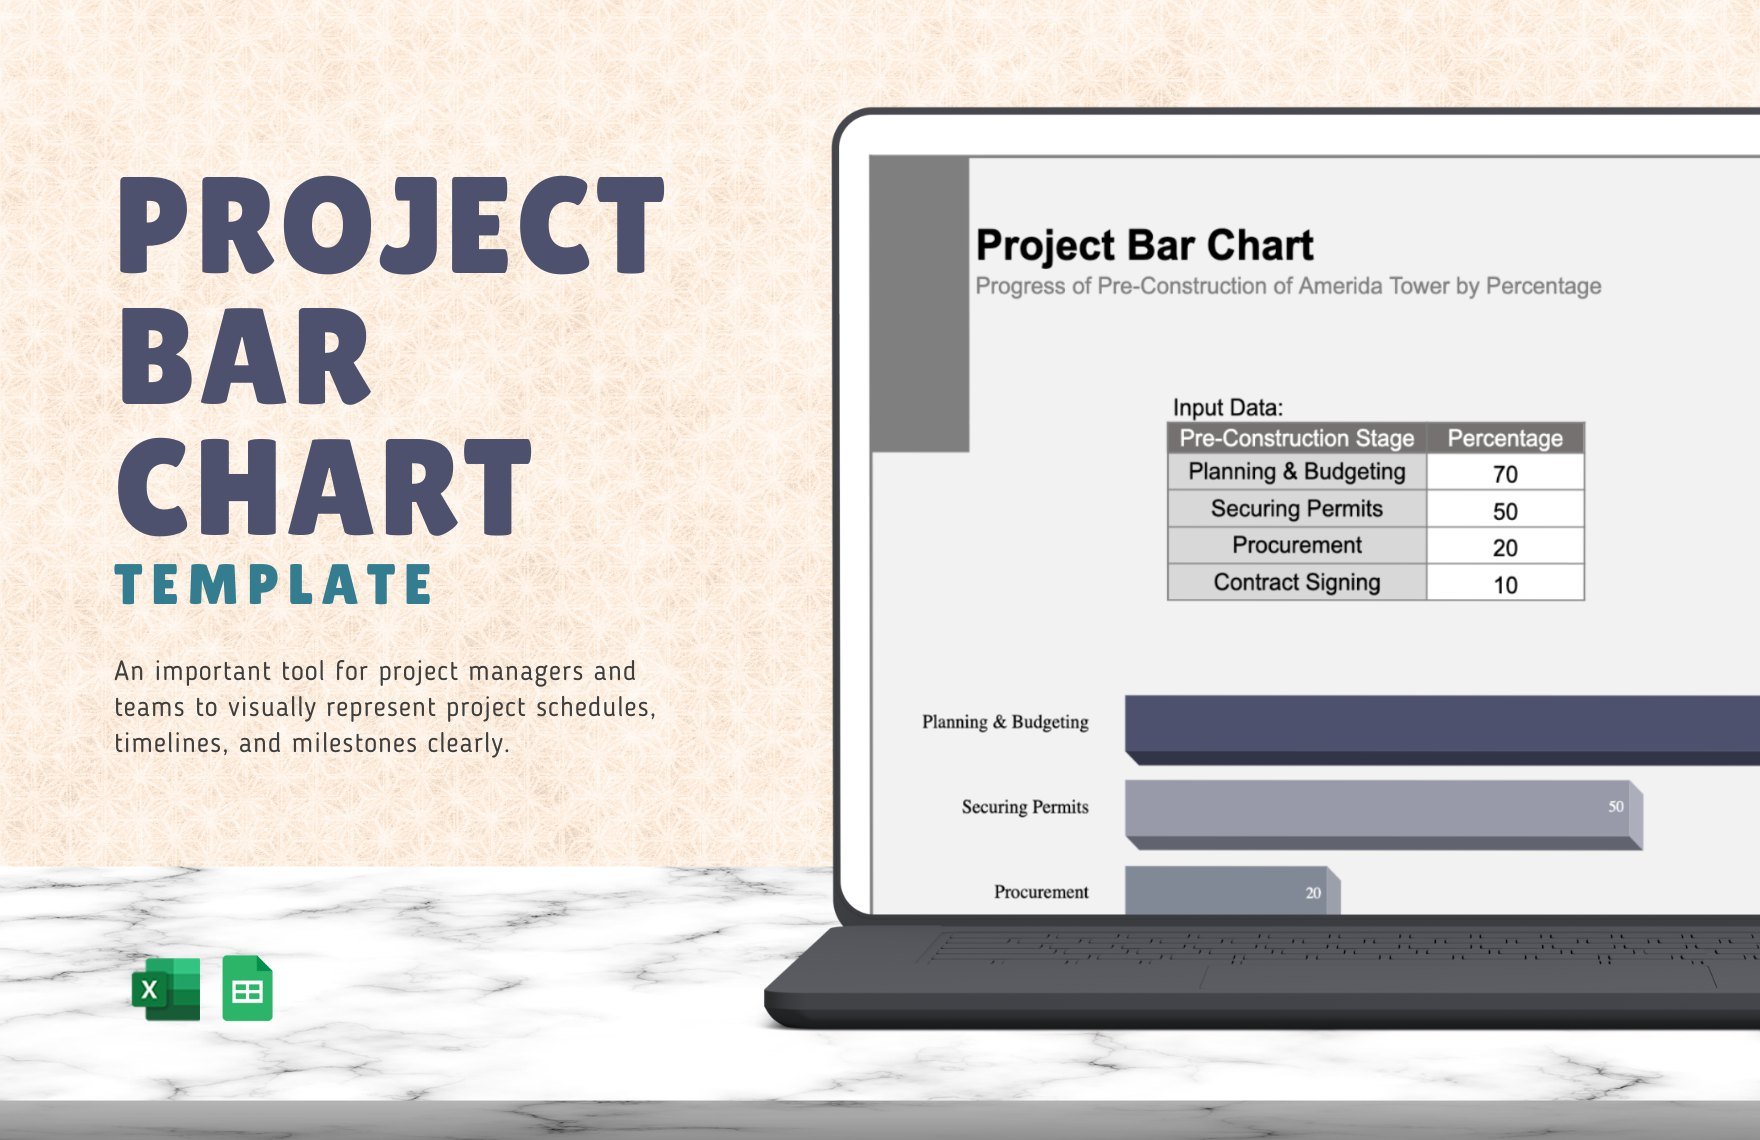 Project Bar Chart